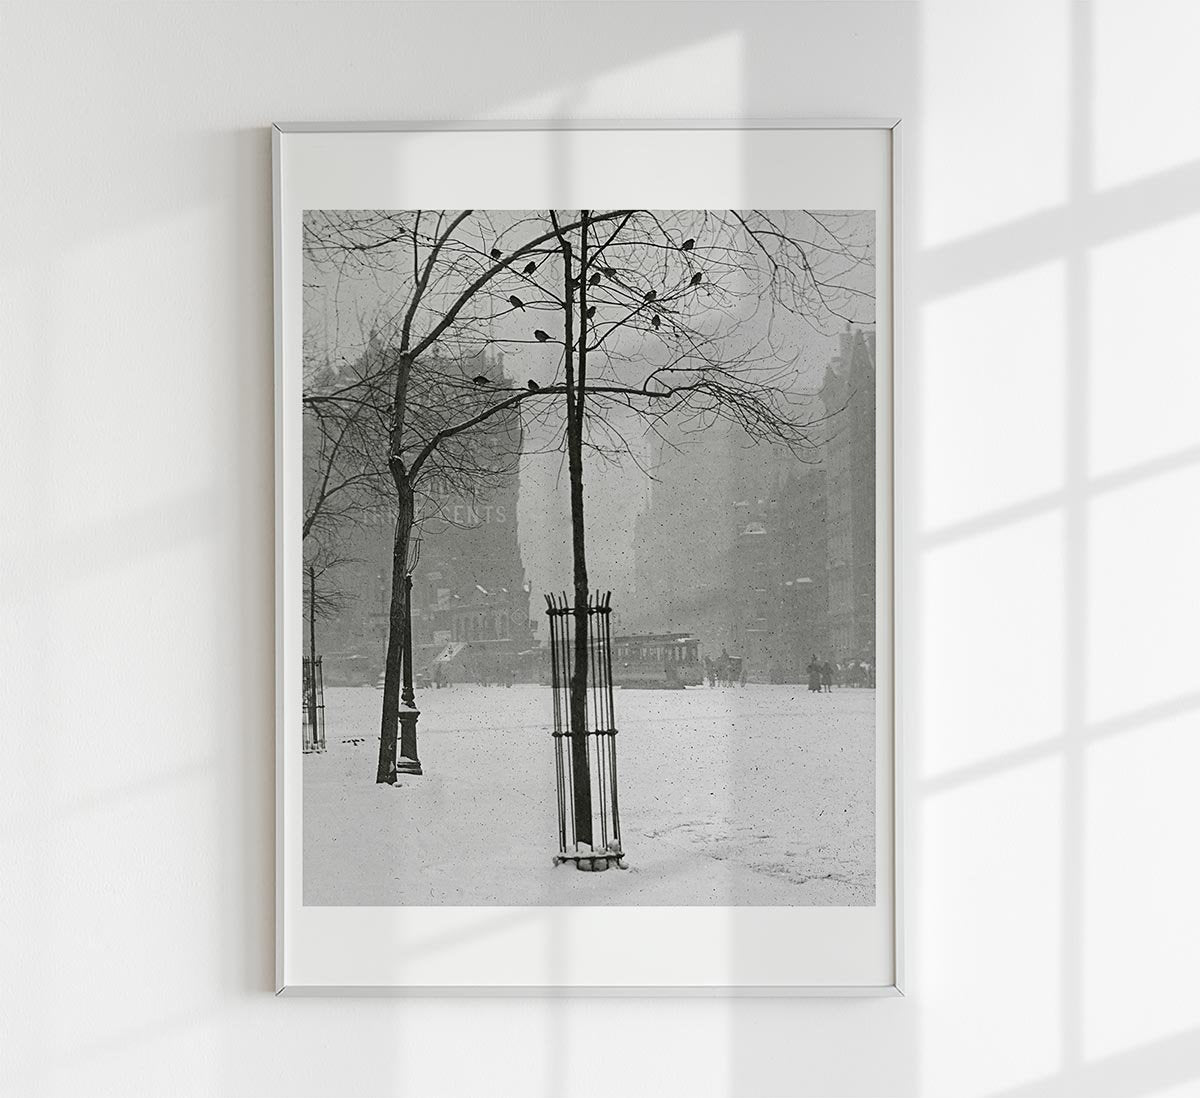 Tree in Snow by Alfred Steglitz